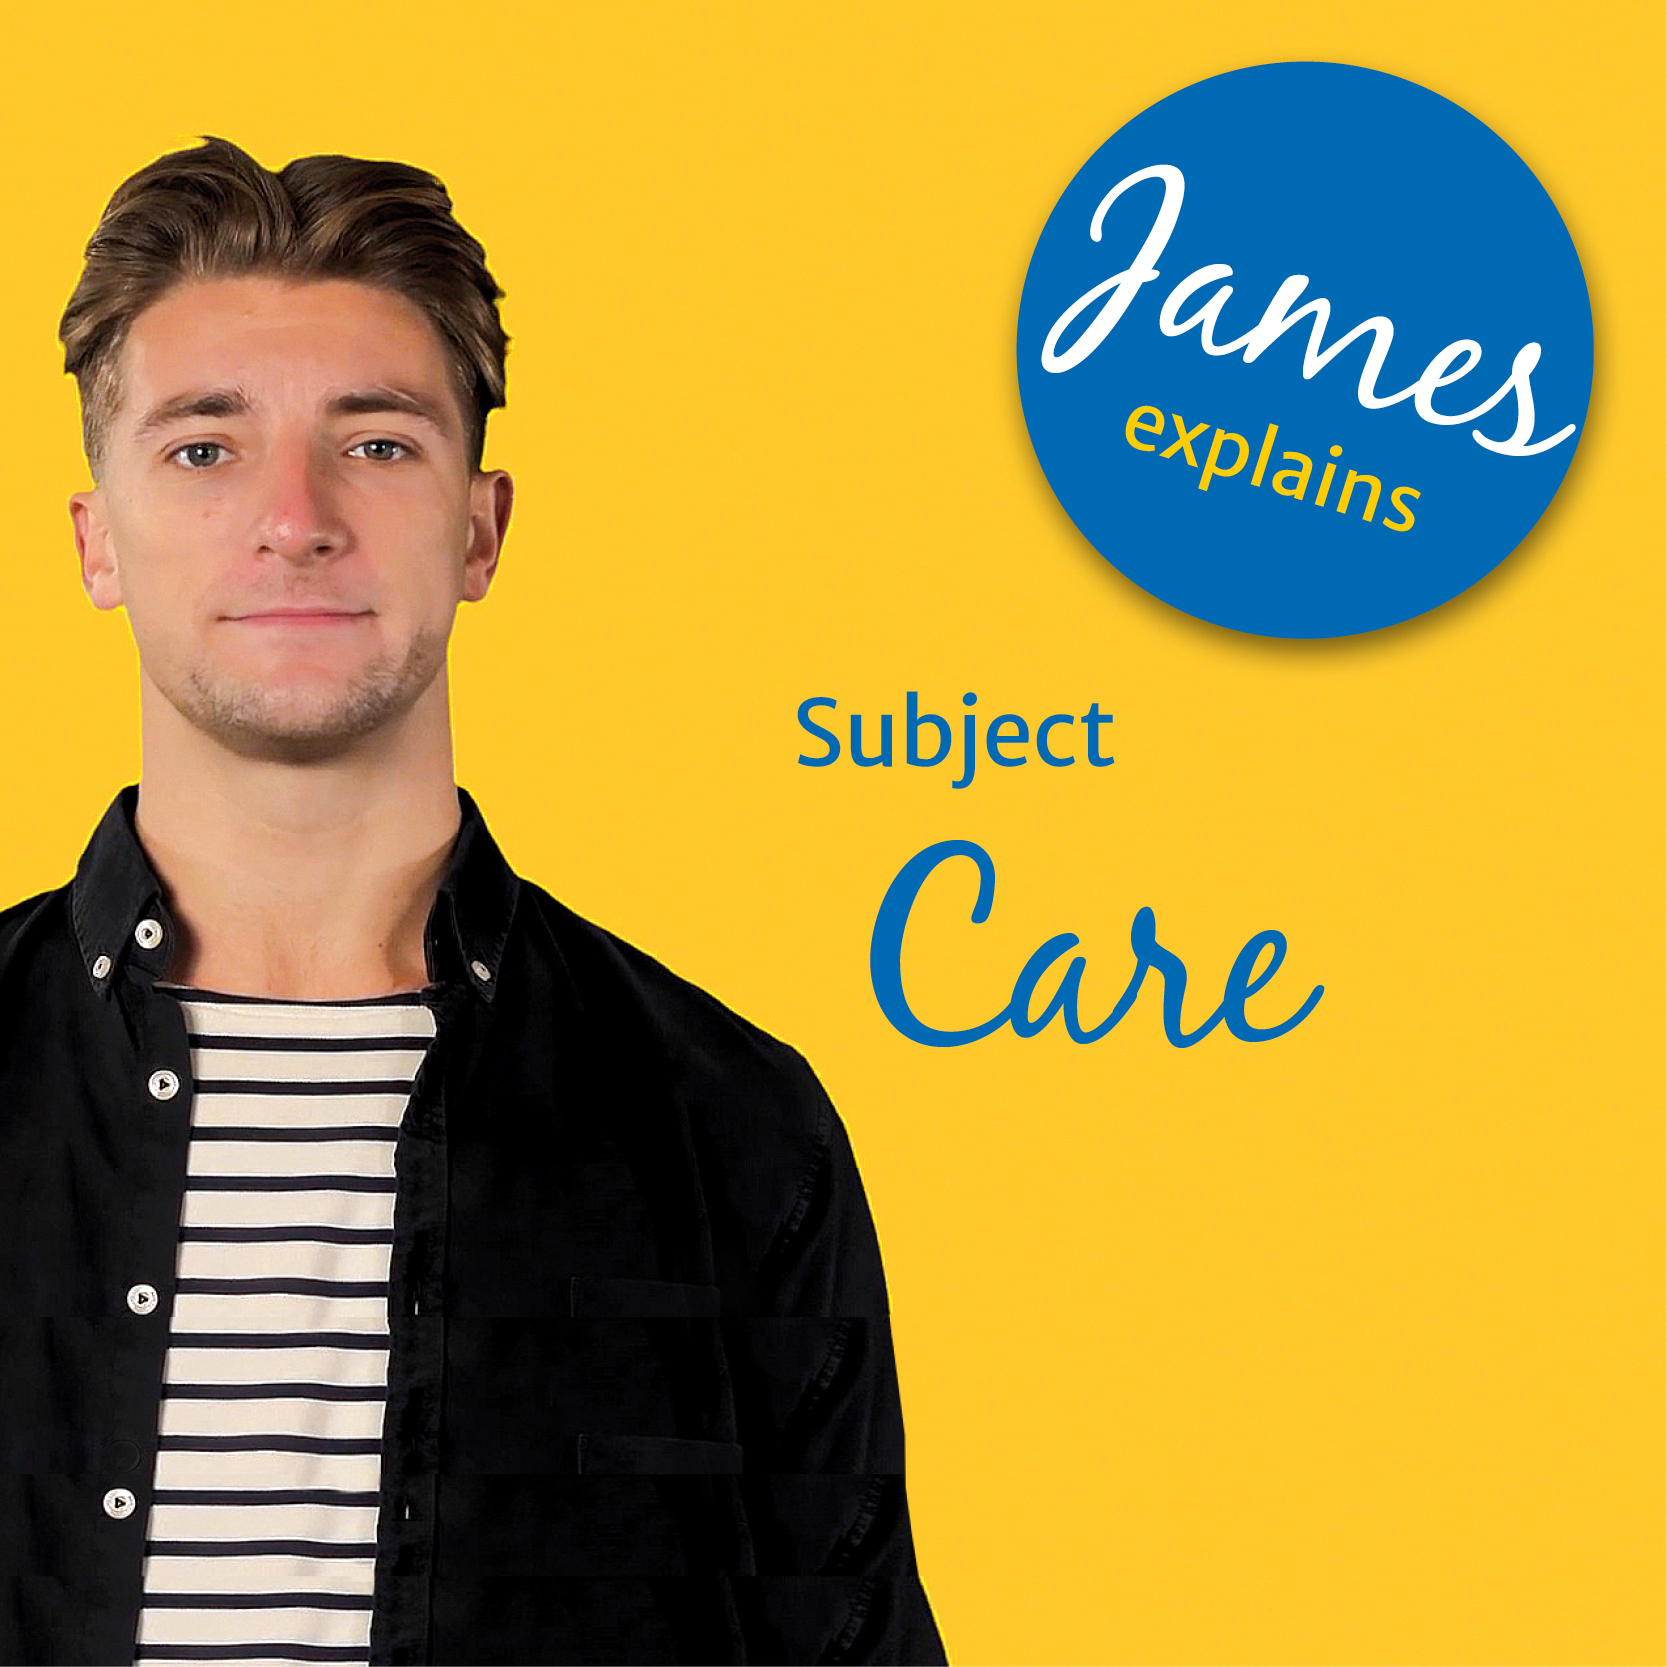 Digitaler Beratungsassistent James mit Text: James explains - Subject: Care